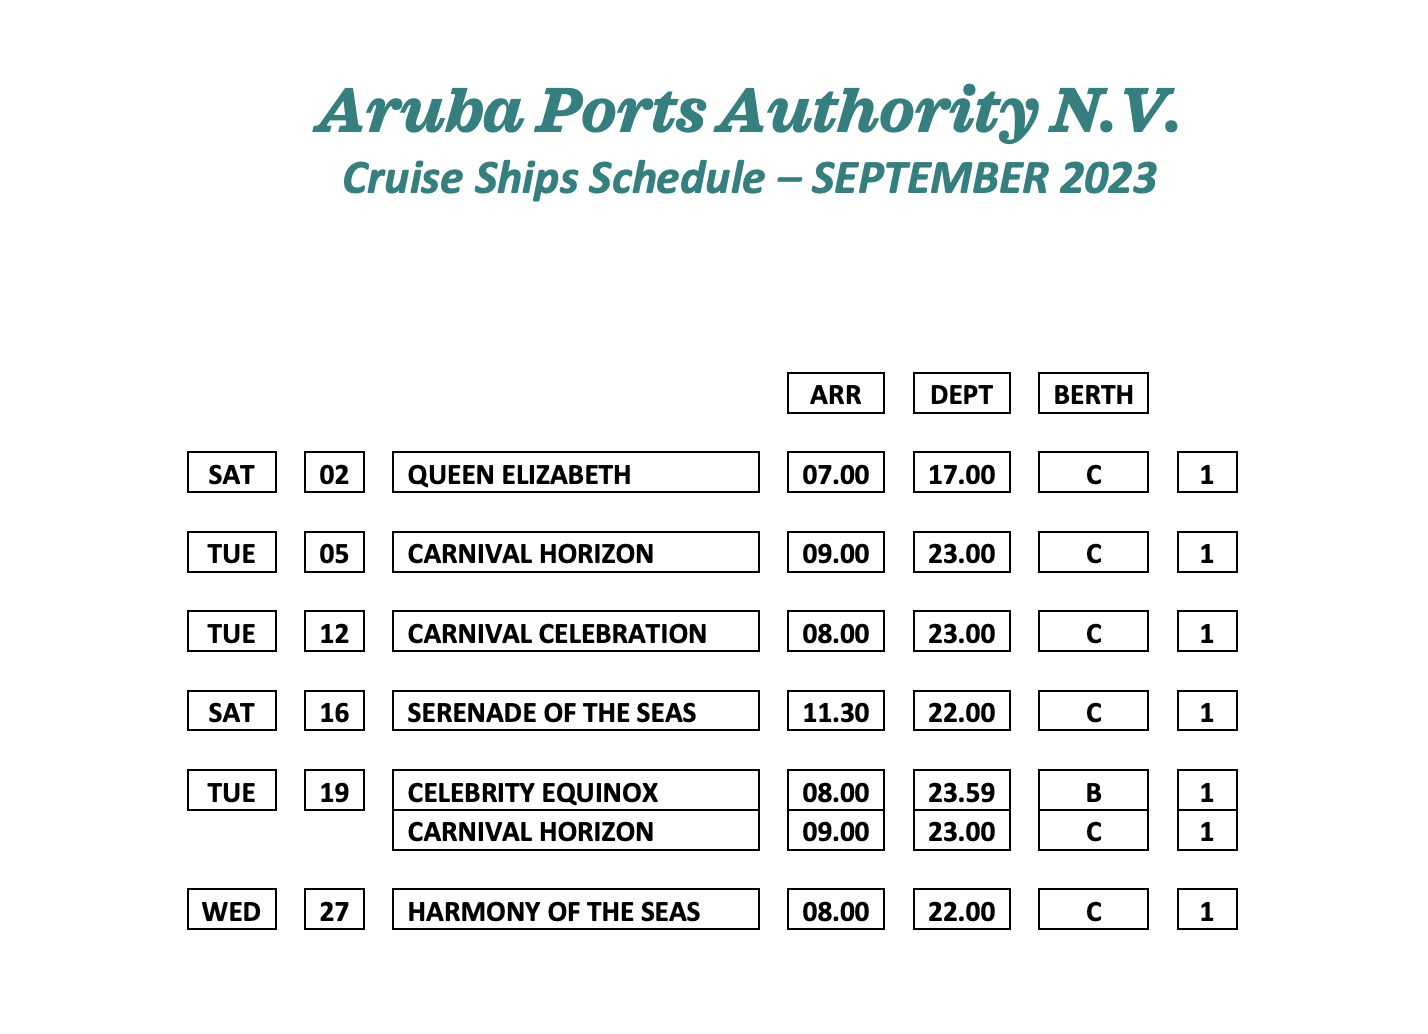 Next Stop Aruba: Cruising Around Town from the Cruise Port